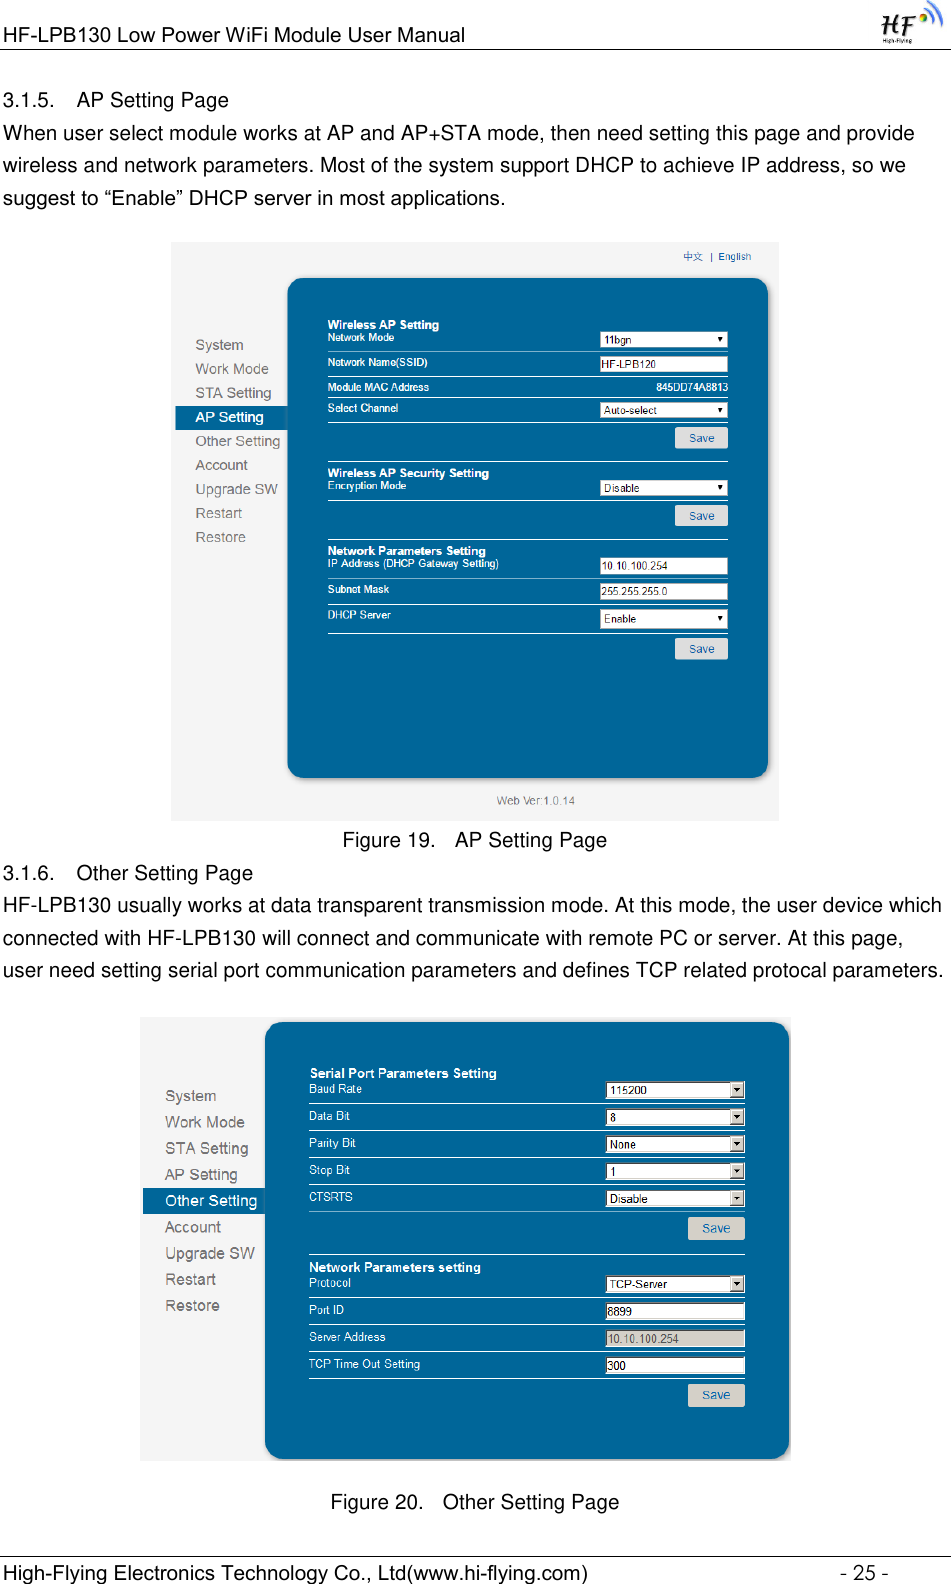 Page 25 of High Flying Electronics Technology HF-LPB130 Wi-Fi Module User Manual GPON SFU System Design